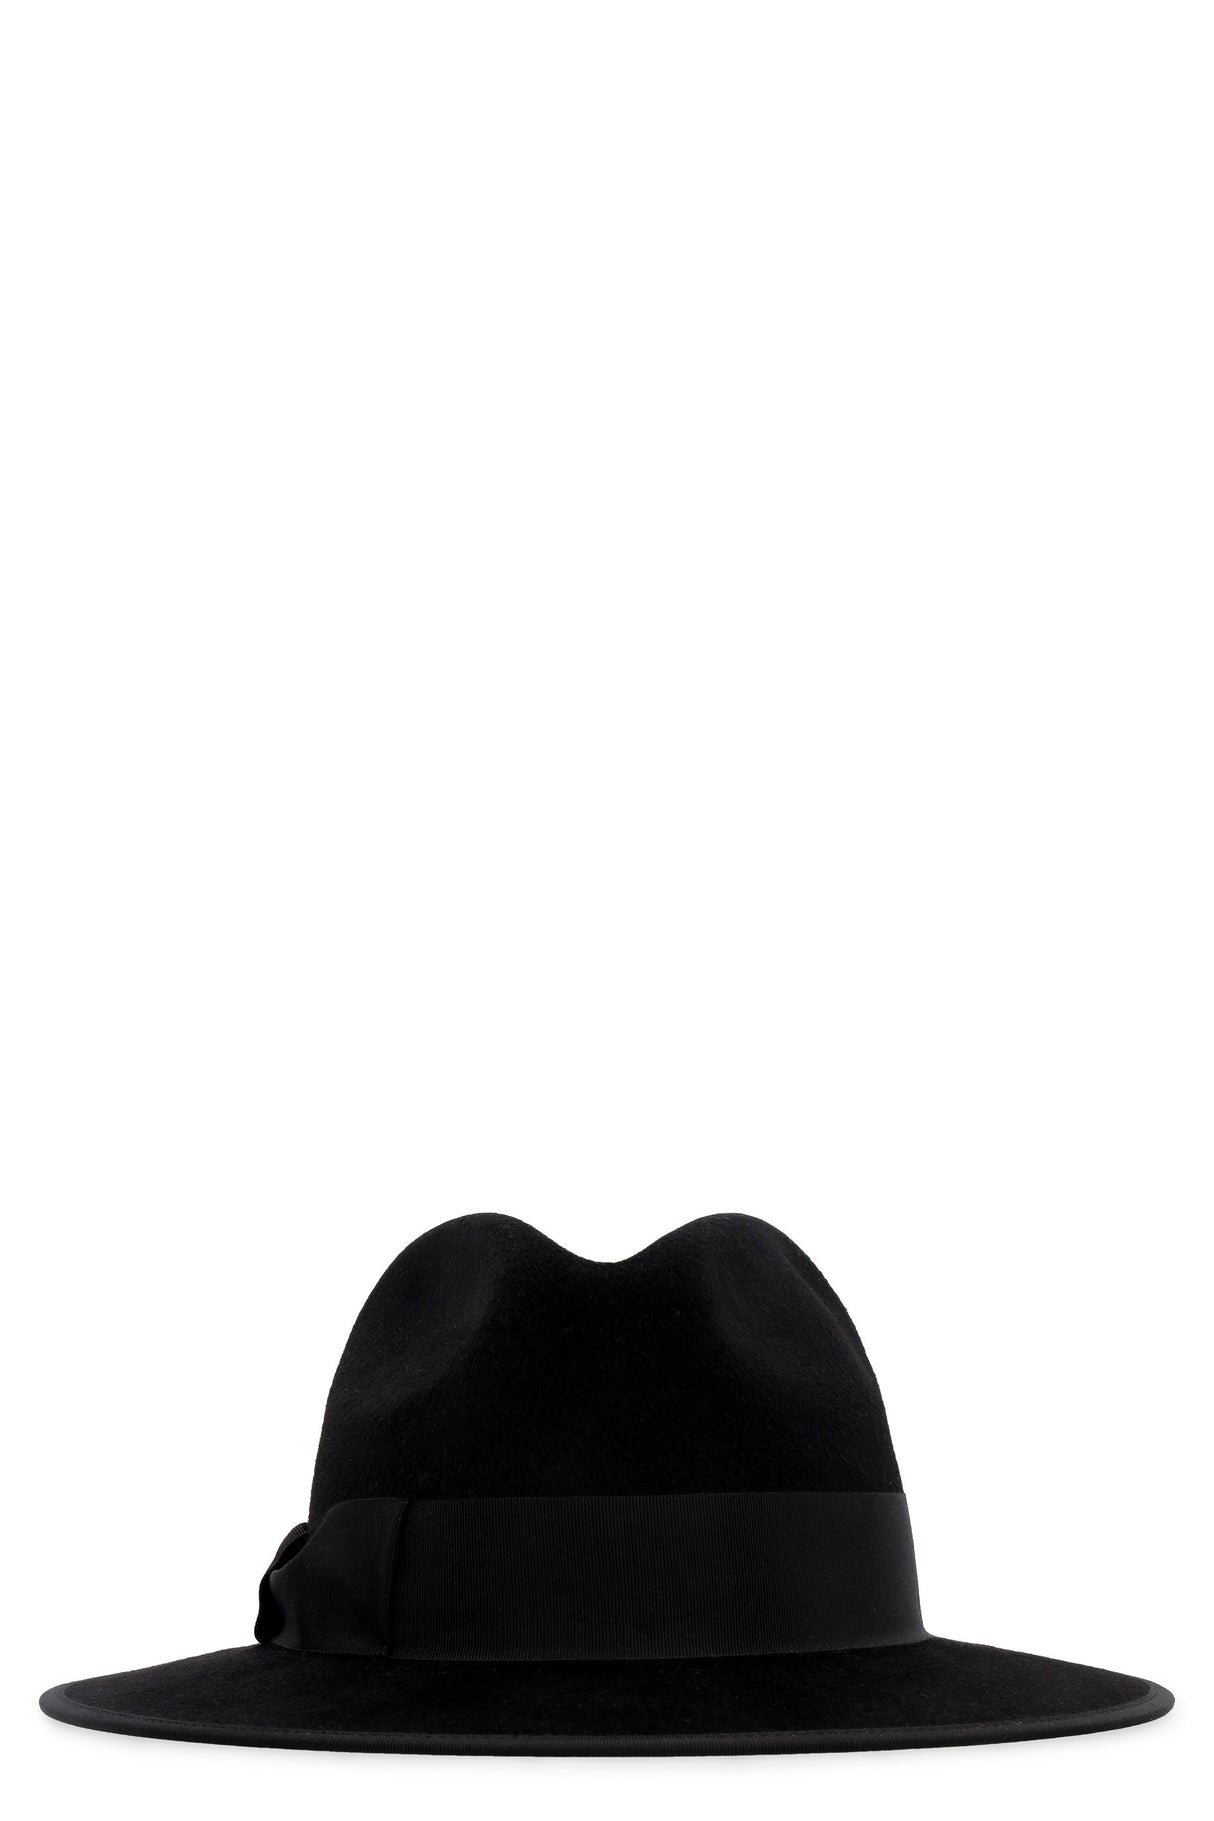 GUCCI Luxurious Black Rabbit Felt Hat for Women - FW20